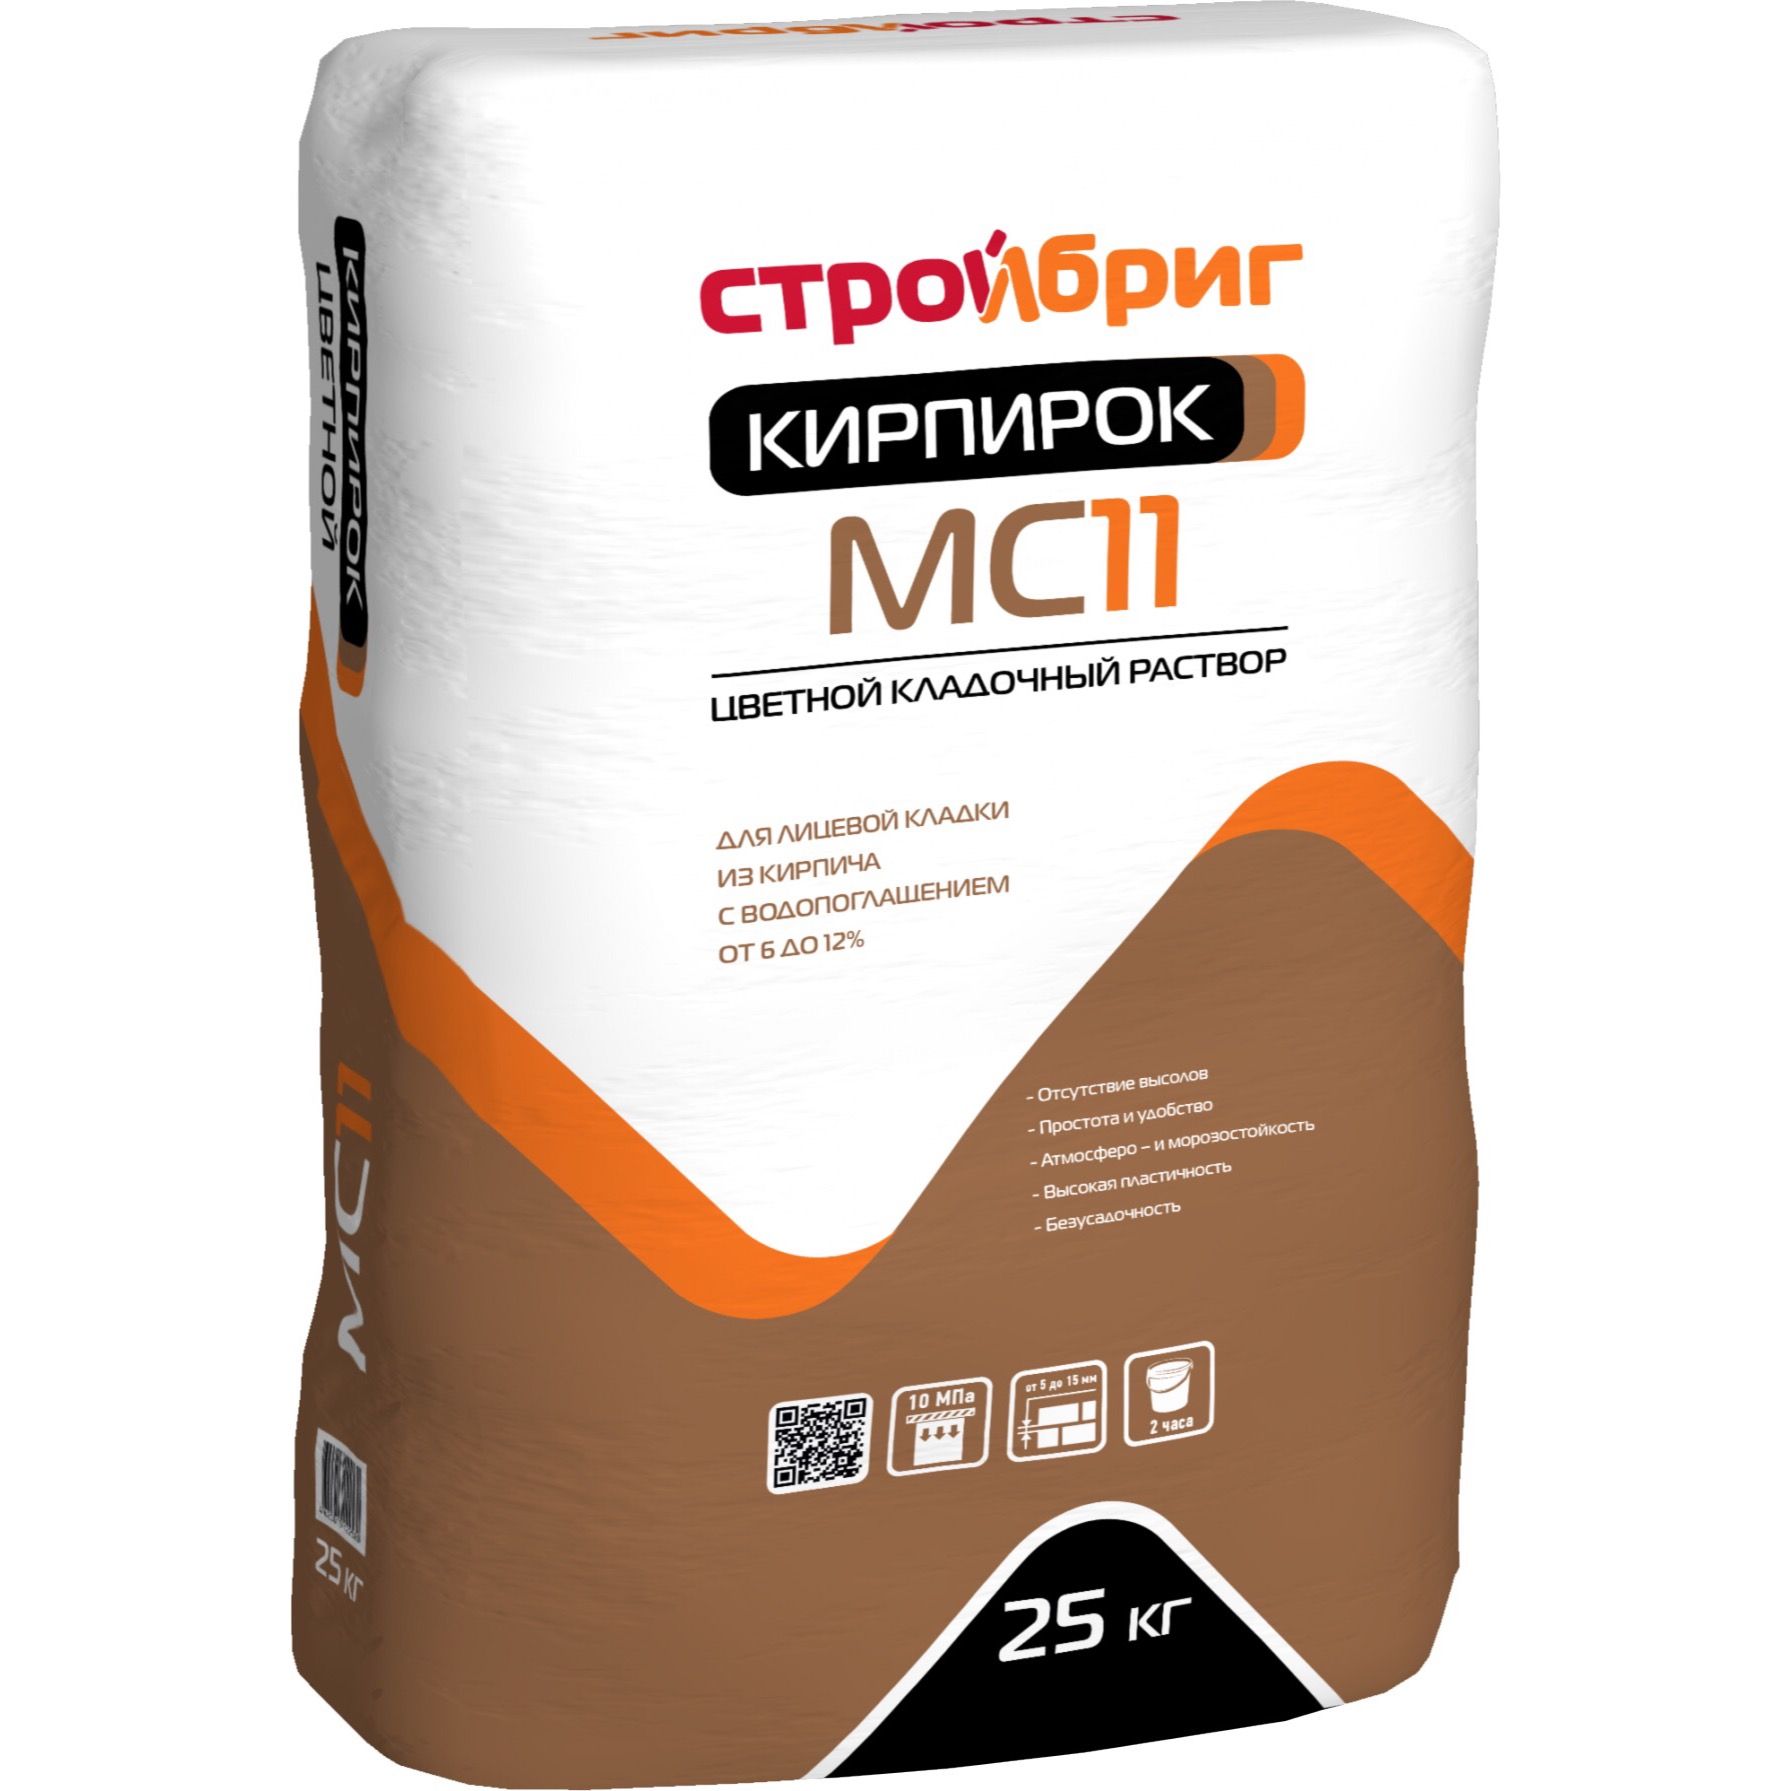 Новая рецептура кладочного раствора Стройбриг Кирпирок MC11